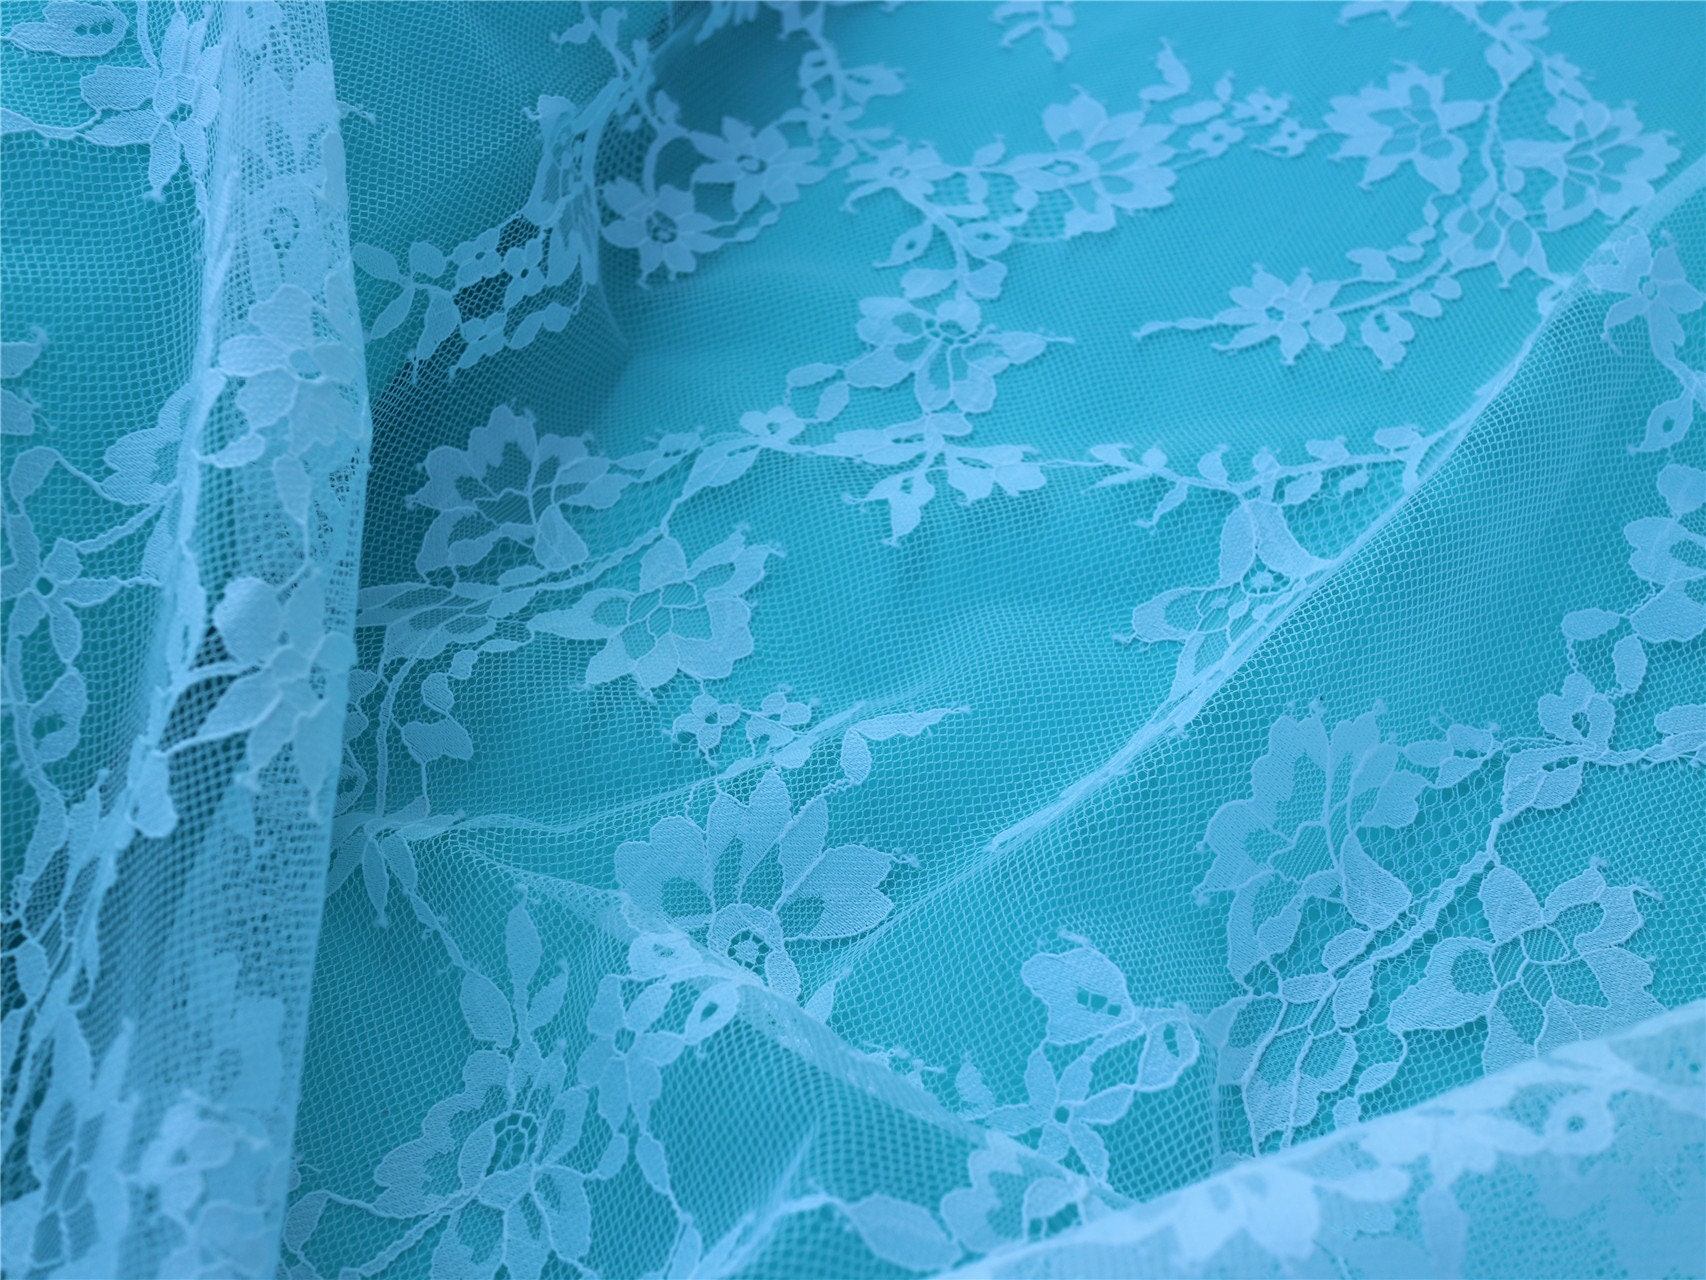 Little Stiff Chantilly Eyelash Lace fabric in high quality | Etsy